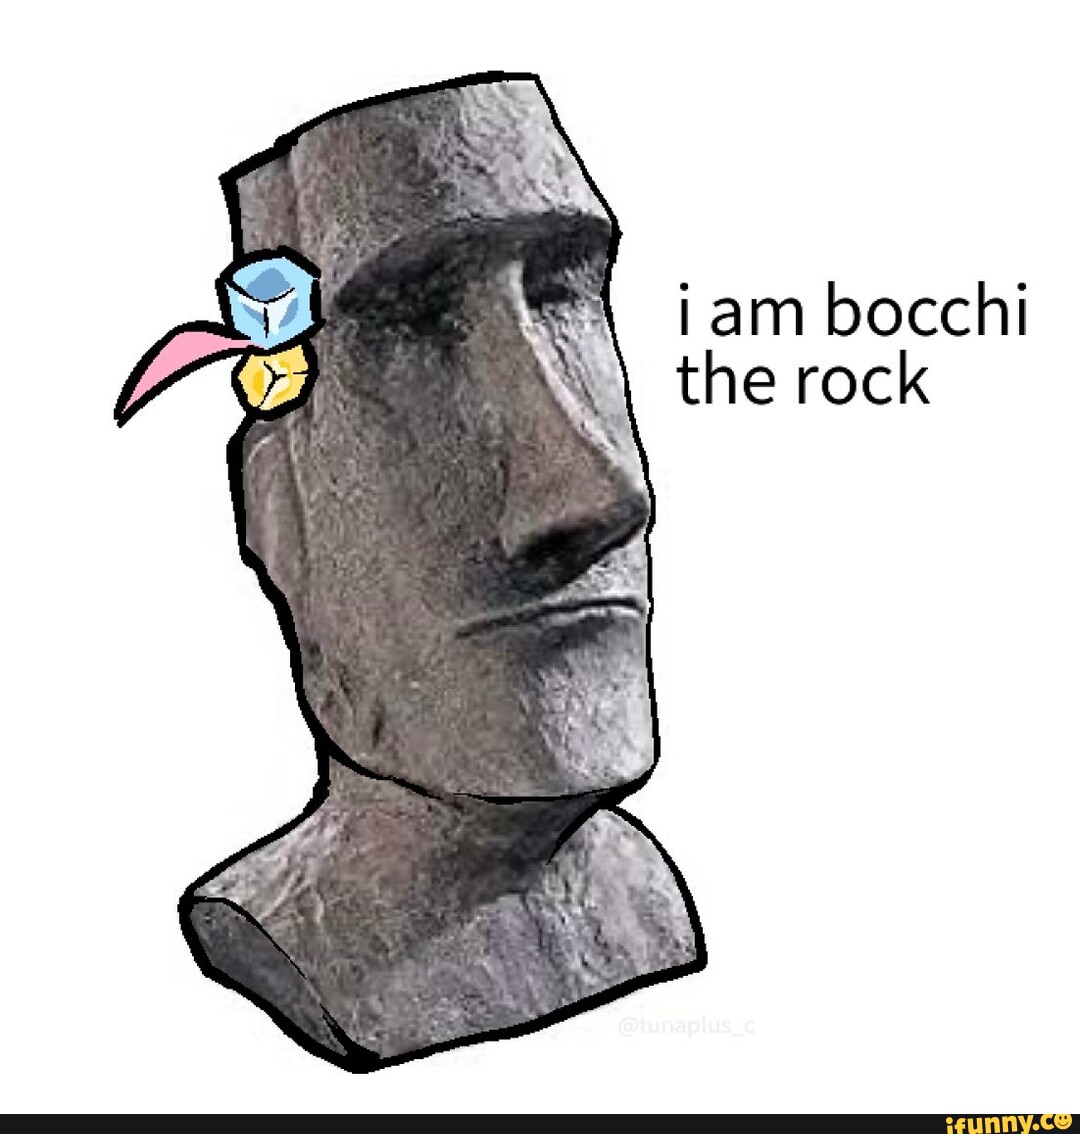 Am bocchi the rock - iFunny Brazil